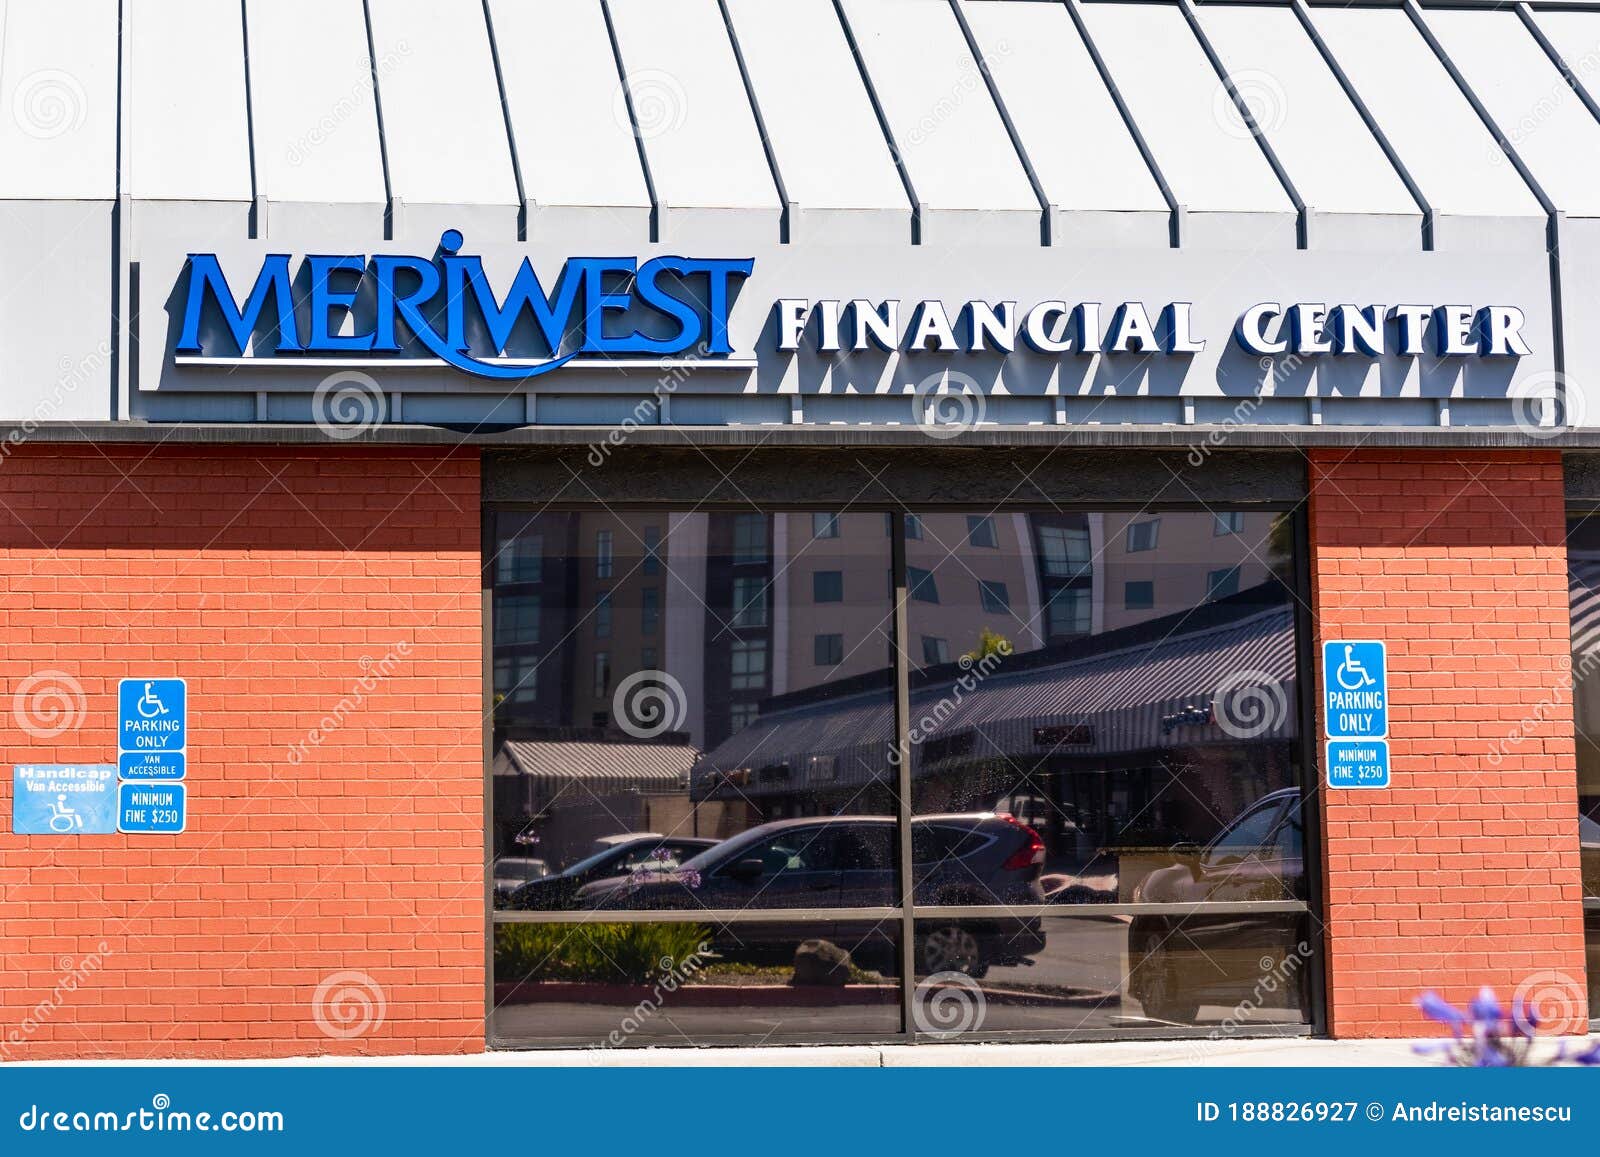 Meriwest Financial Center Location